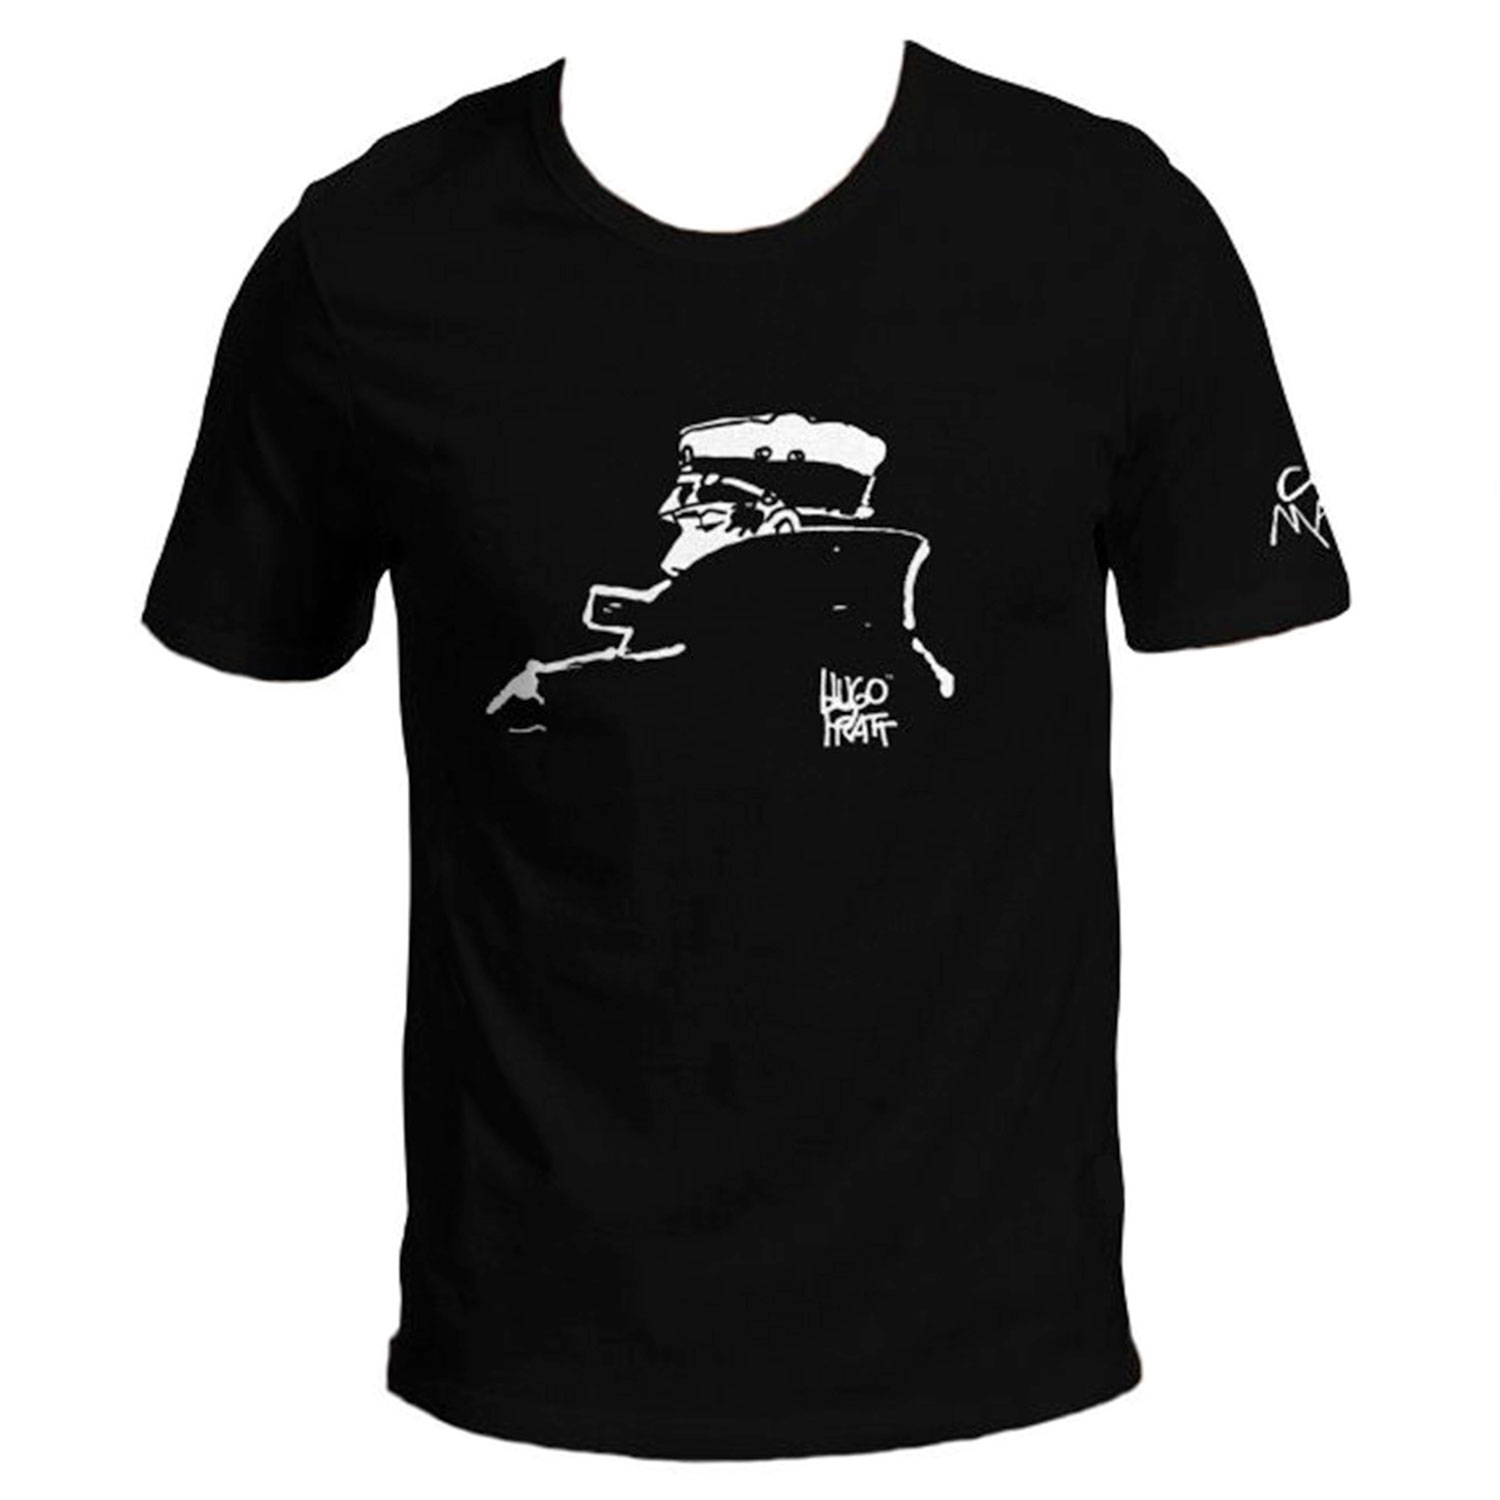 Hugo Pratt T-shirt : Corto Maltese , Nocturnal - Black - Size S